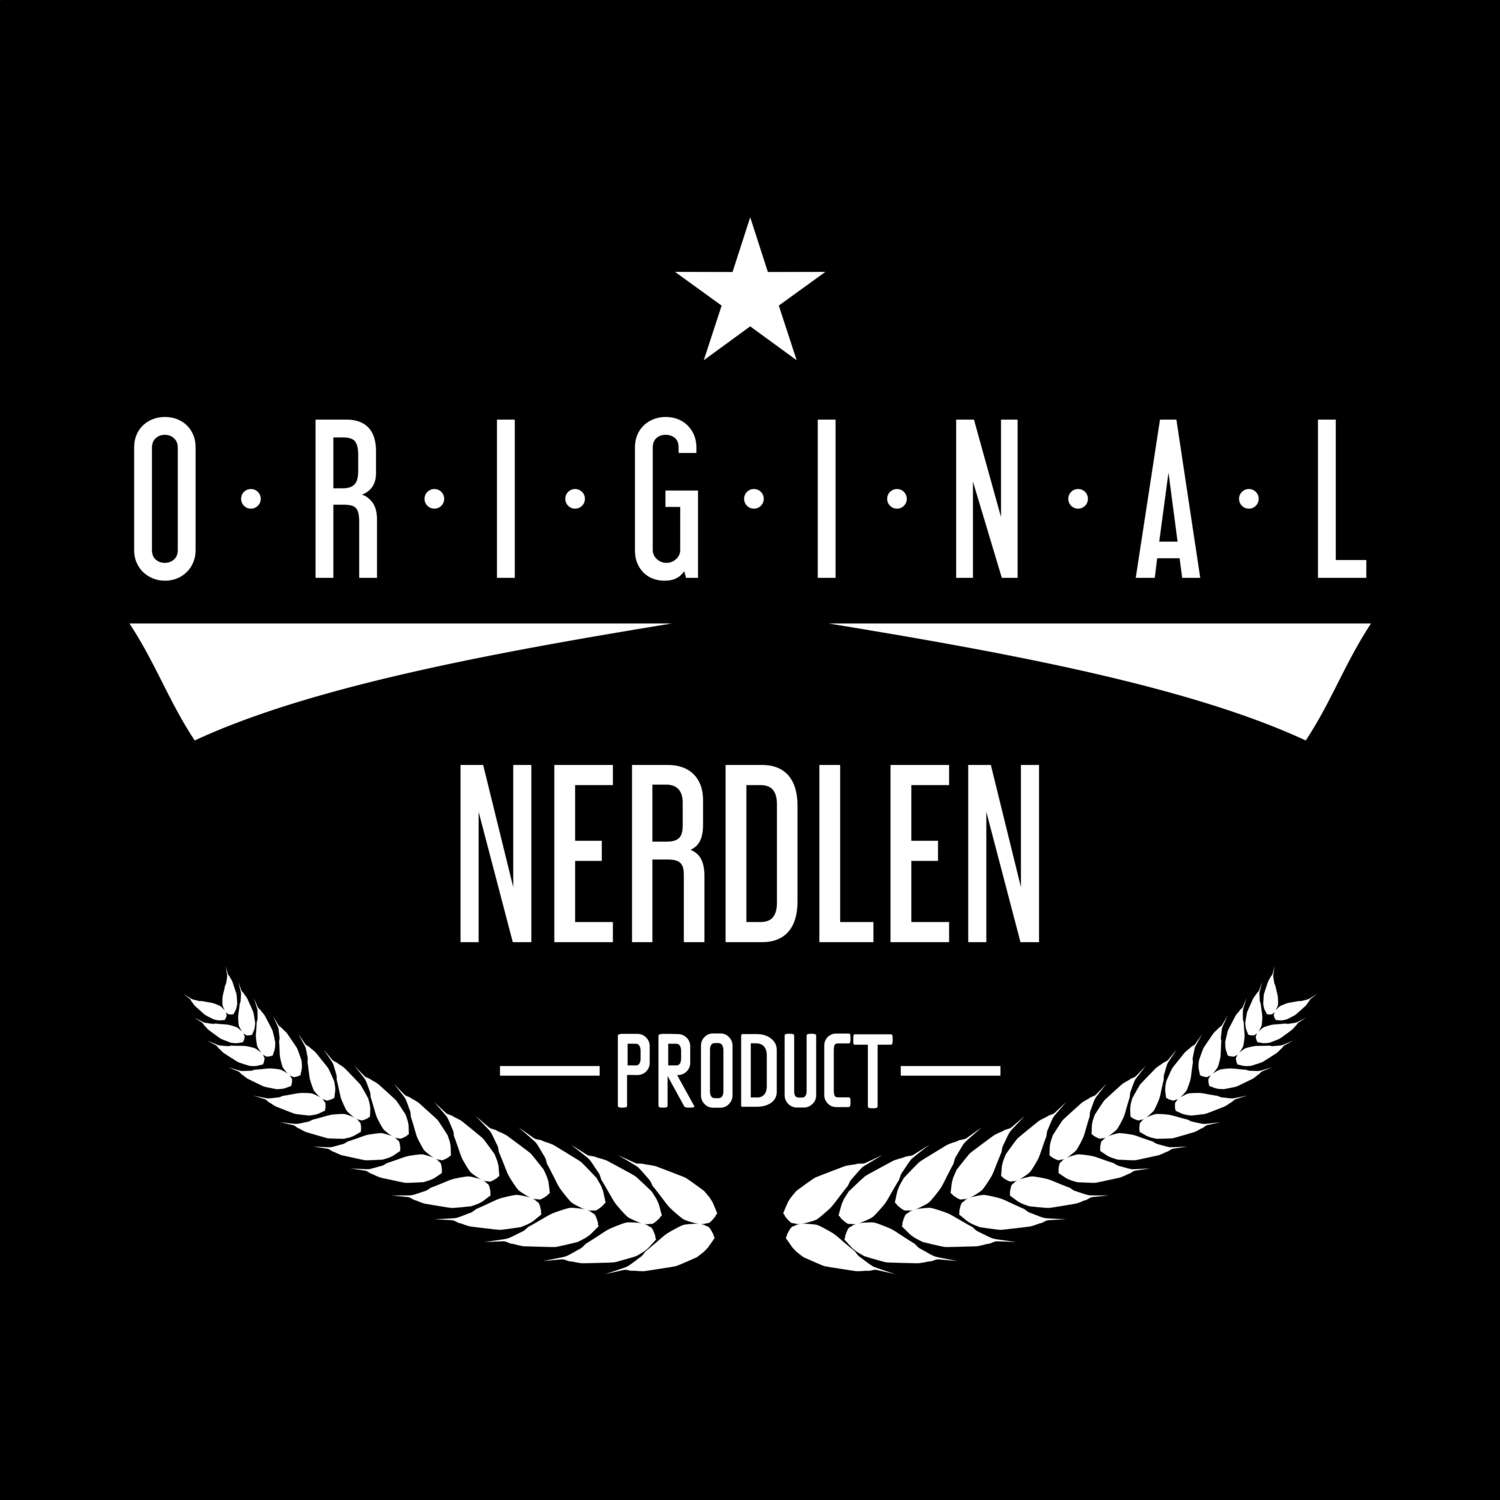 Nerdlen T-Shirt »Original Product«